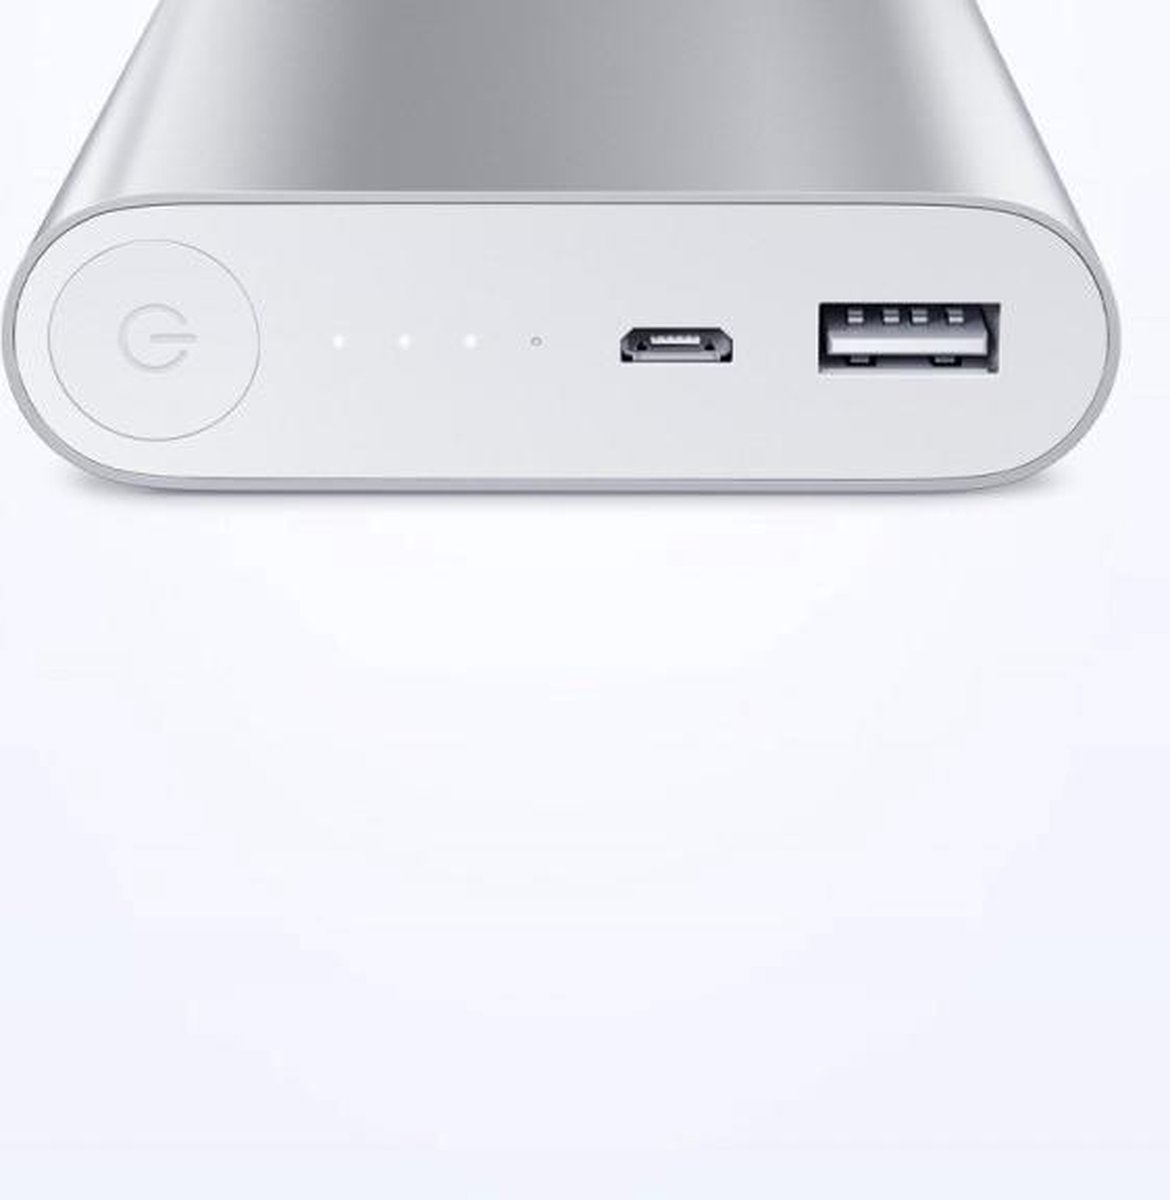 Zakenman Ideaal Pijnstiller Xiaomi Powerbank 10.400 mAh Externe Batterij | bol.com